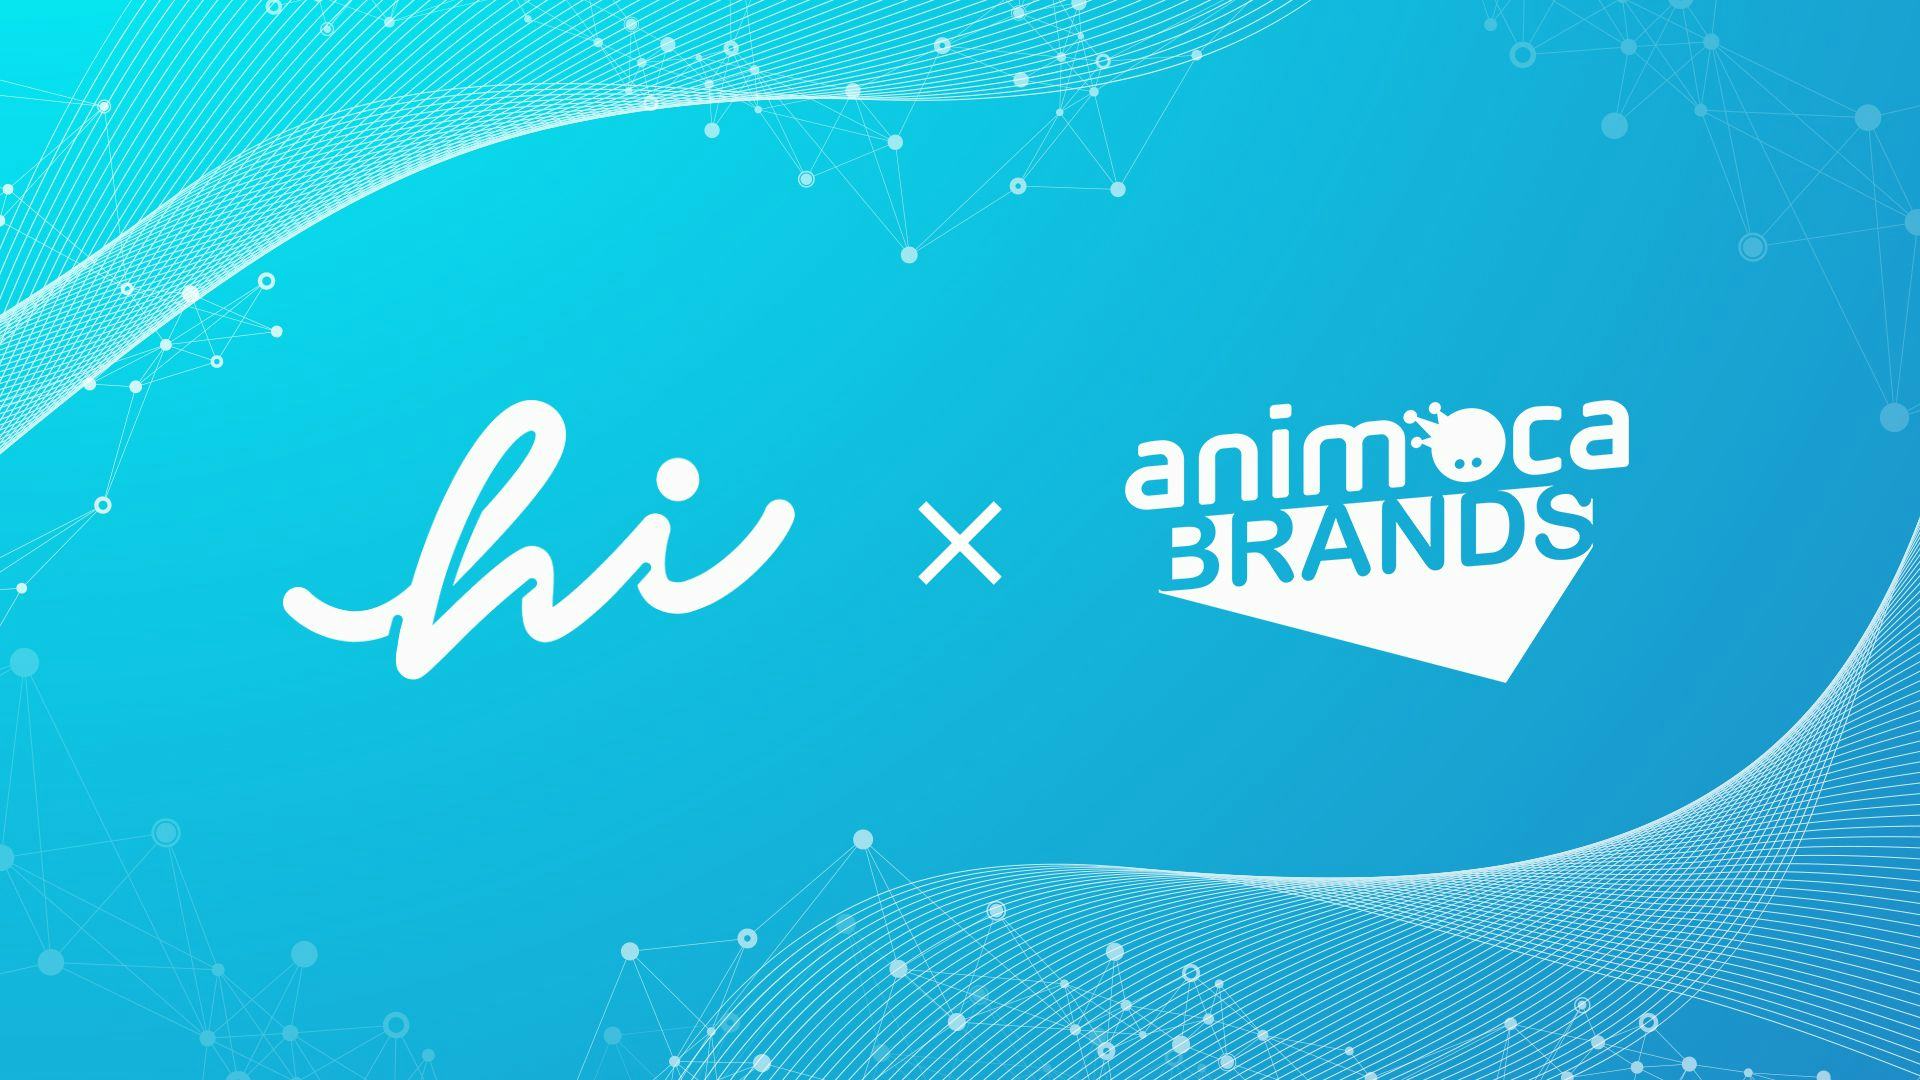 Animoca Brands has invested $30 million in Hong Kong-based Super App Hi 